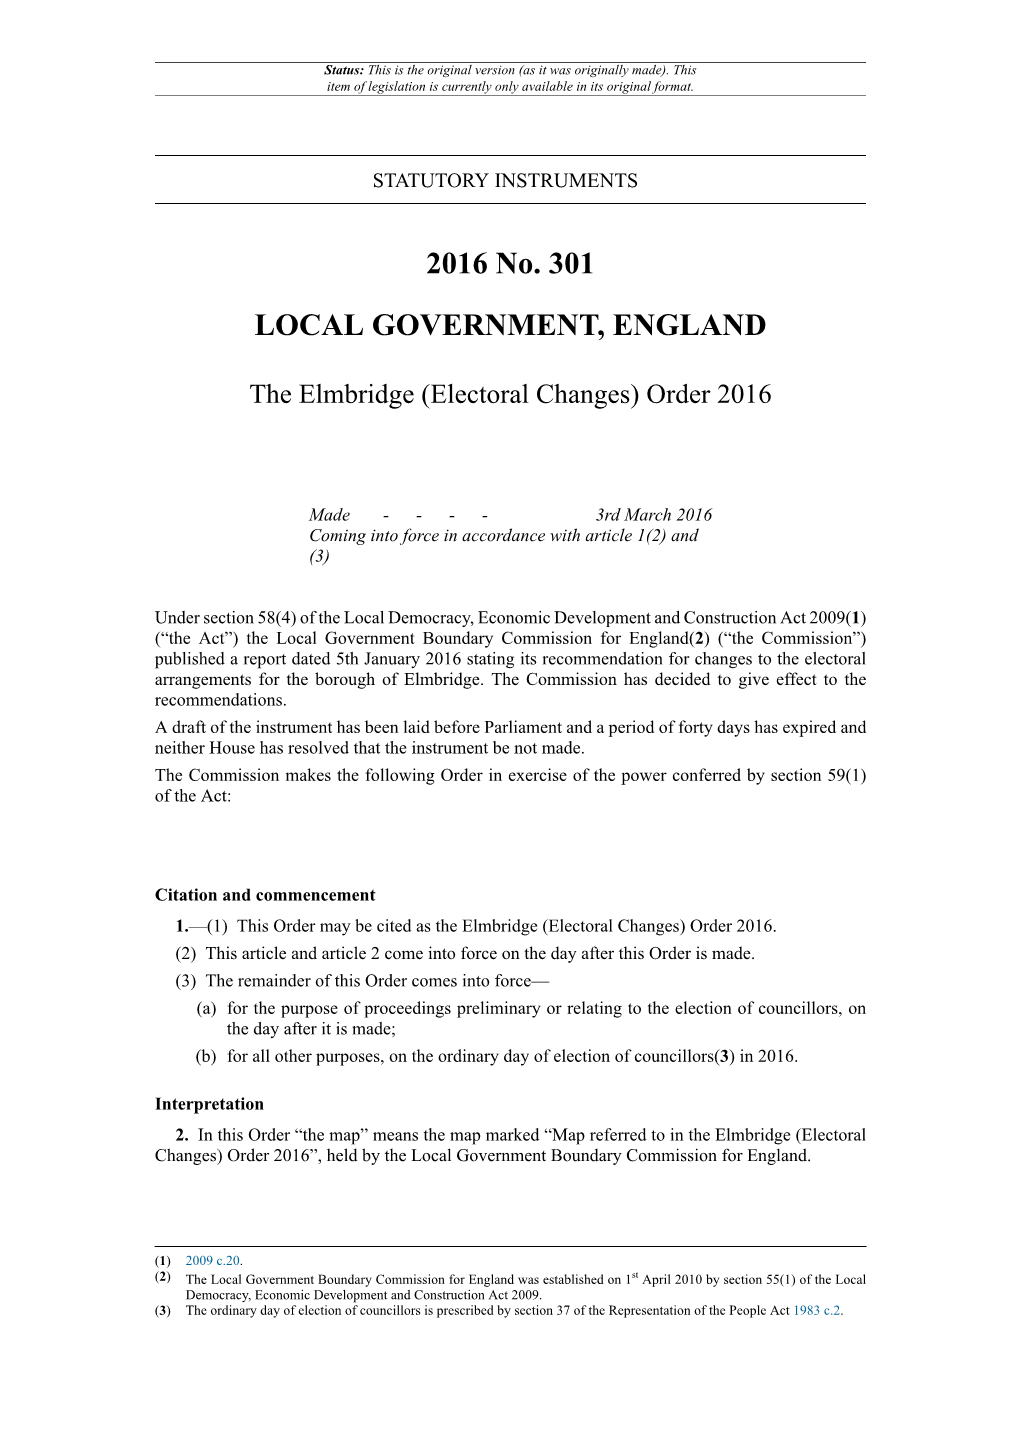 The Elmbridge (Electoral Changes) Order 2016